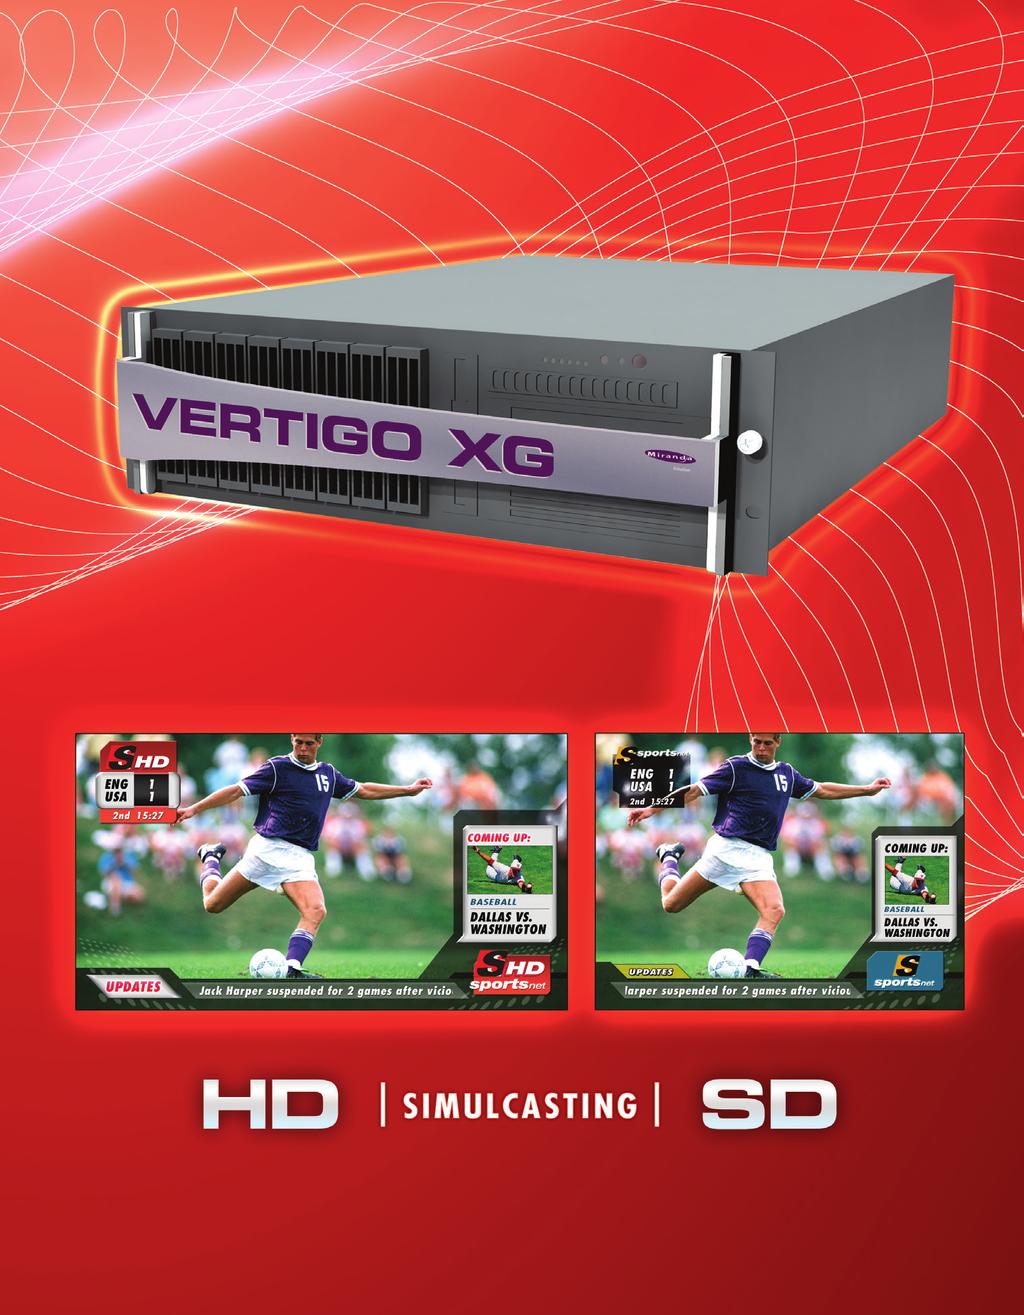 Vertigo XG Advanced HD/SD Graphics Processor Multilevel Clip, Animation and Still Playout Vertigo XG provides all the playout capabilities needed for the most advanced branding and promotional